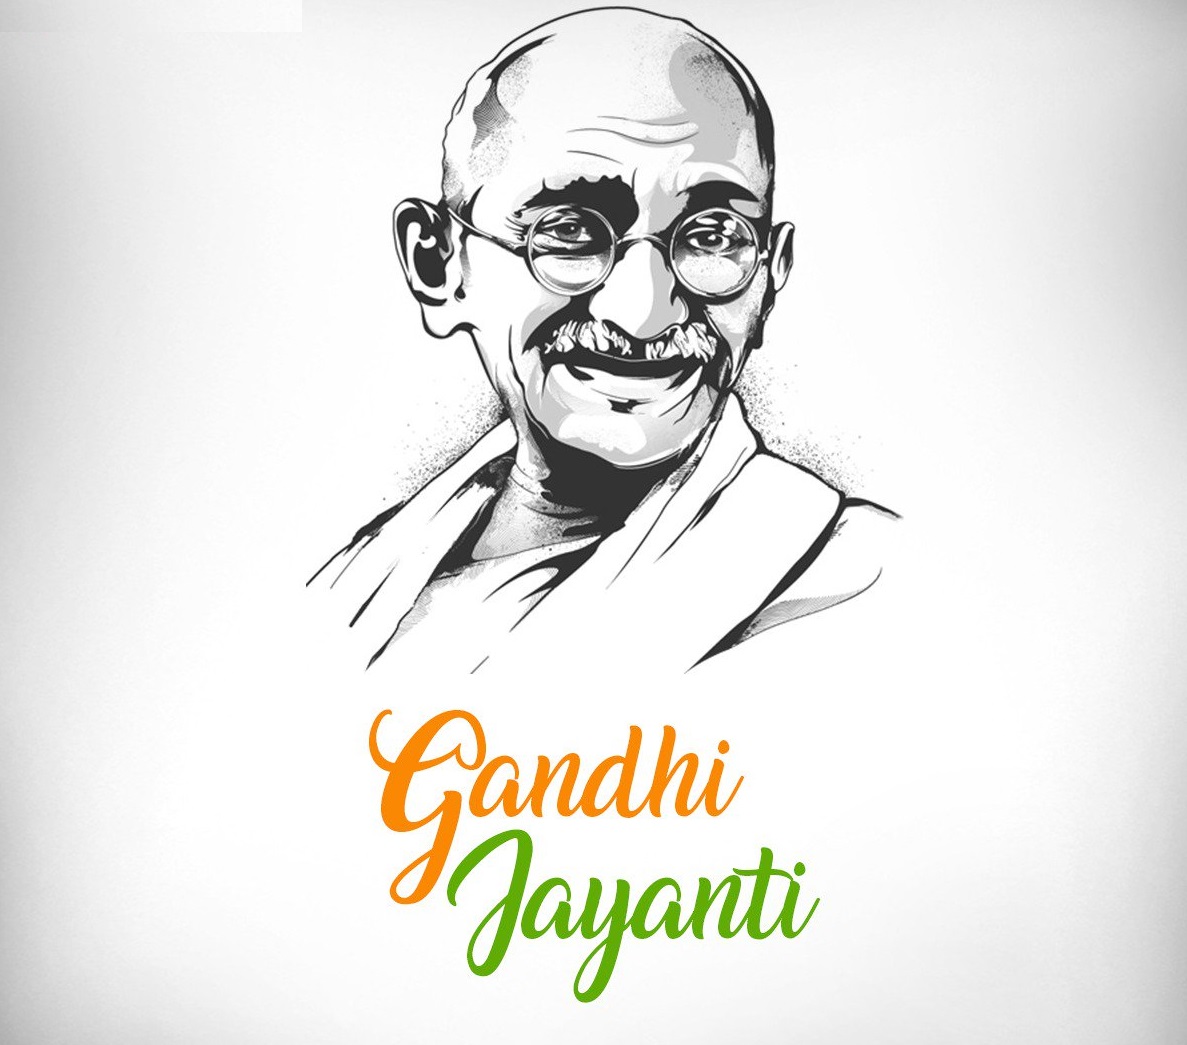 Indianbureaucracy Com Tribute On Gandhi Jayanti Indian Bureaucracy Is An Exclusive News